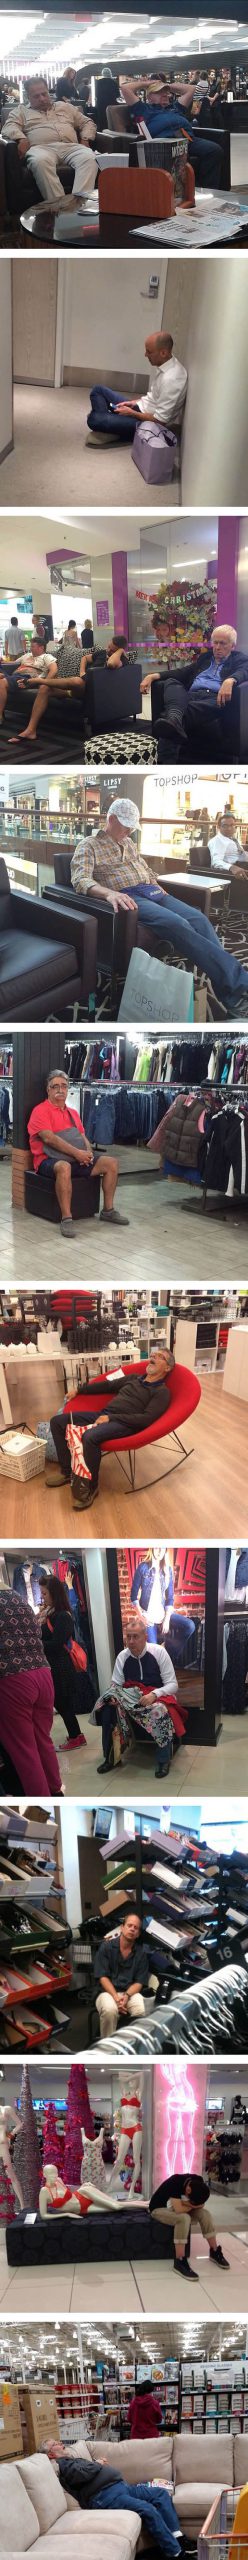 Winkelen mannen slapen